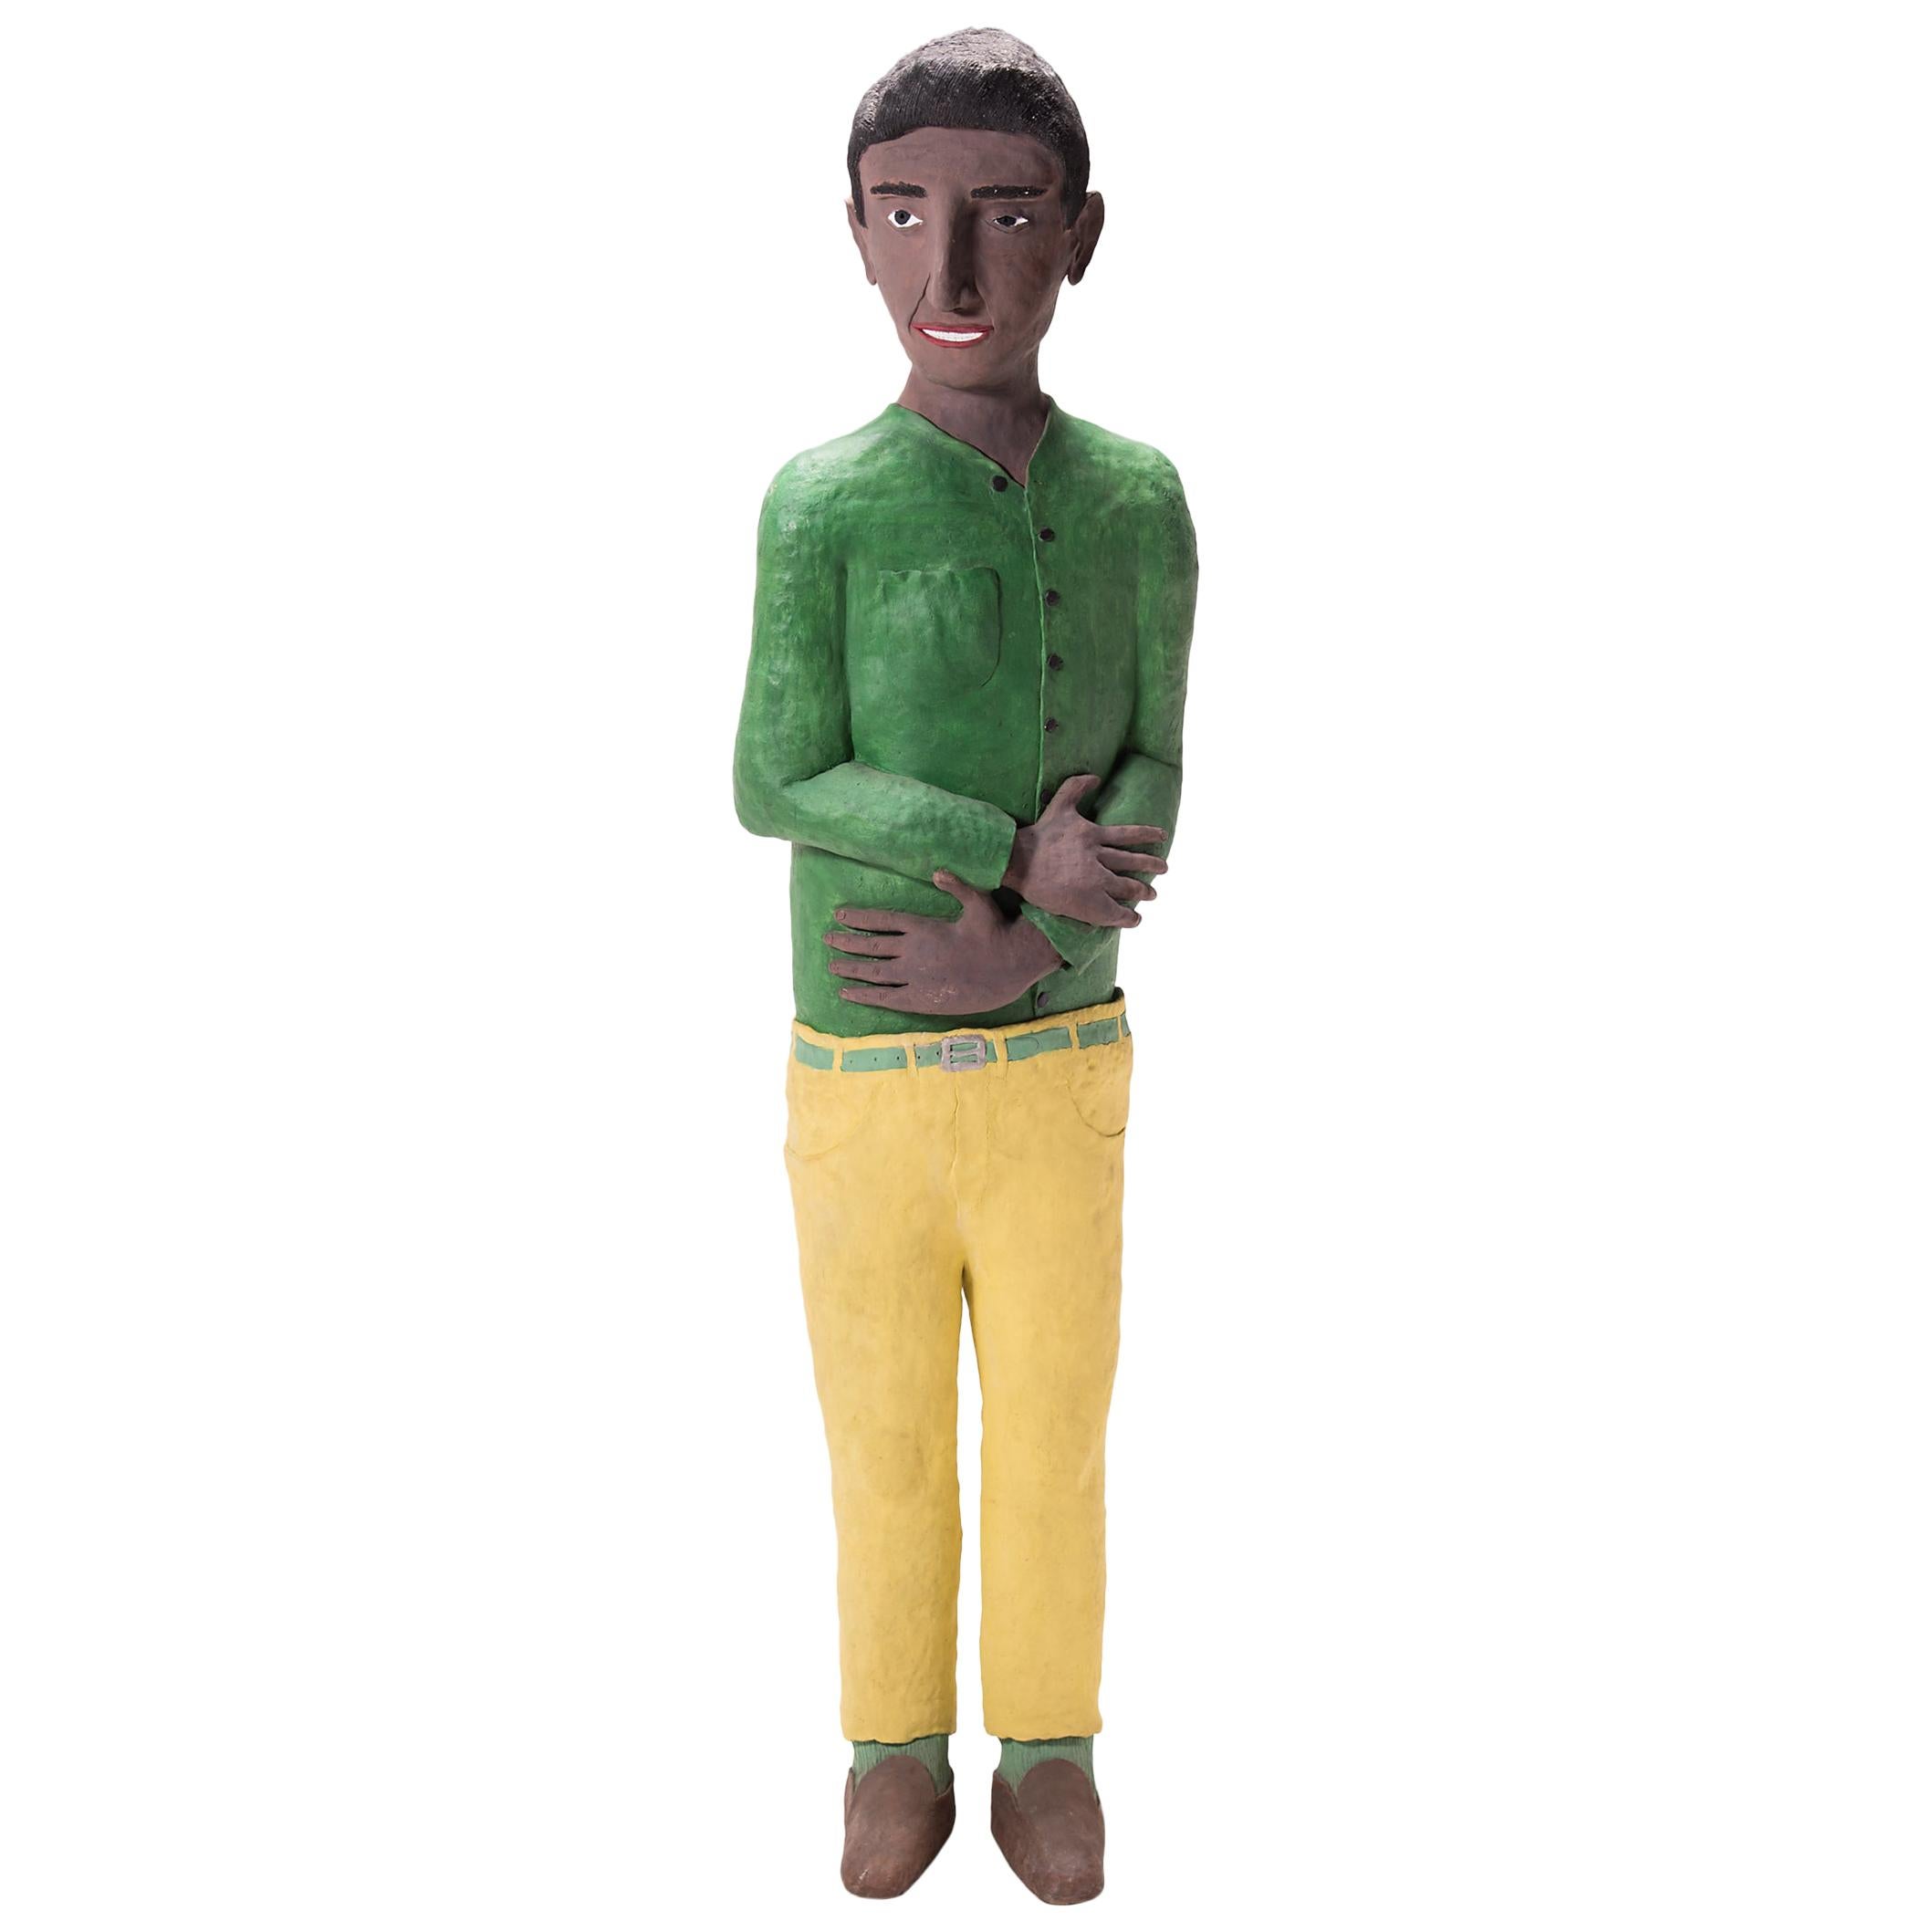 « Man in Green Shirt » d'Allan Winkler